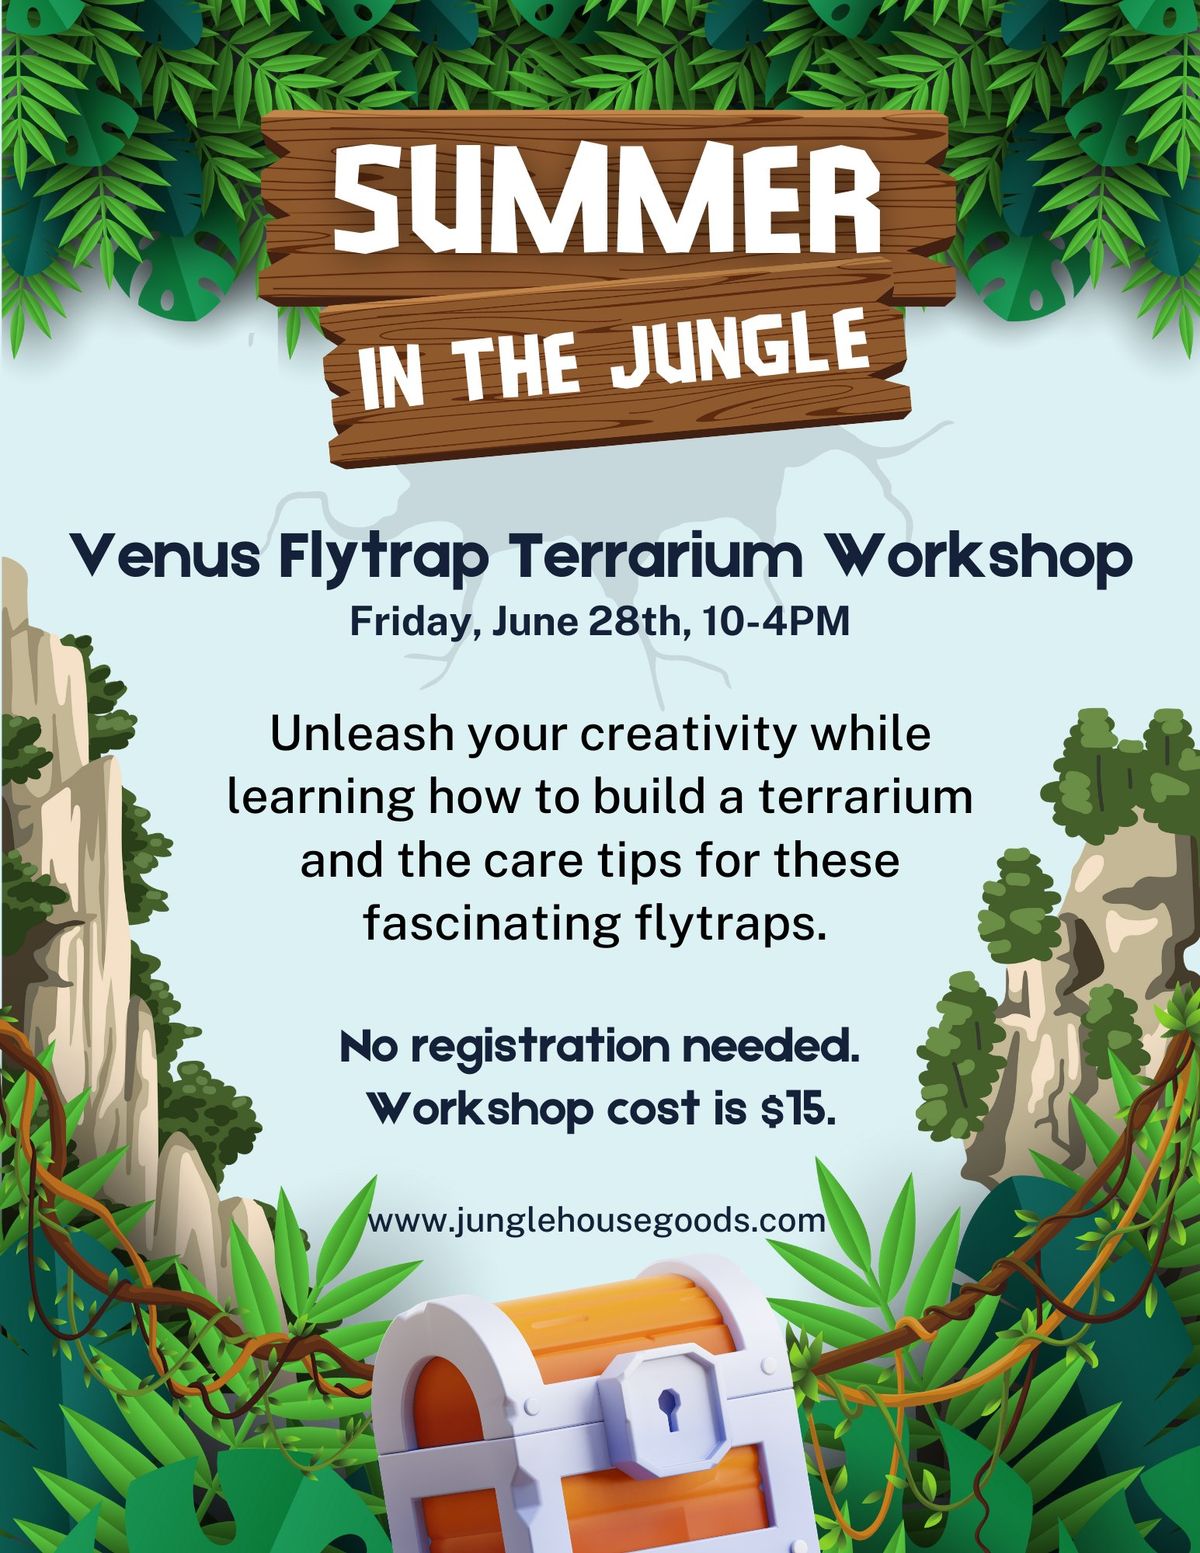 Venus Flytrap Terrarium Workshop